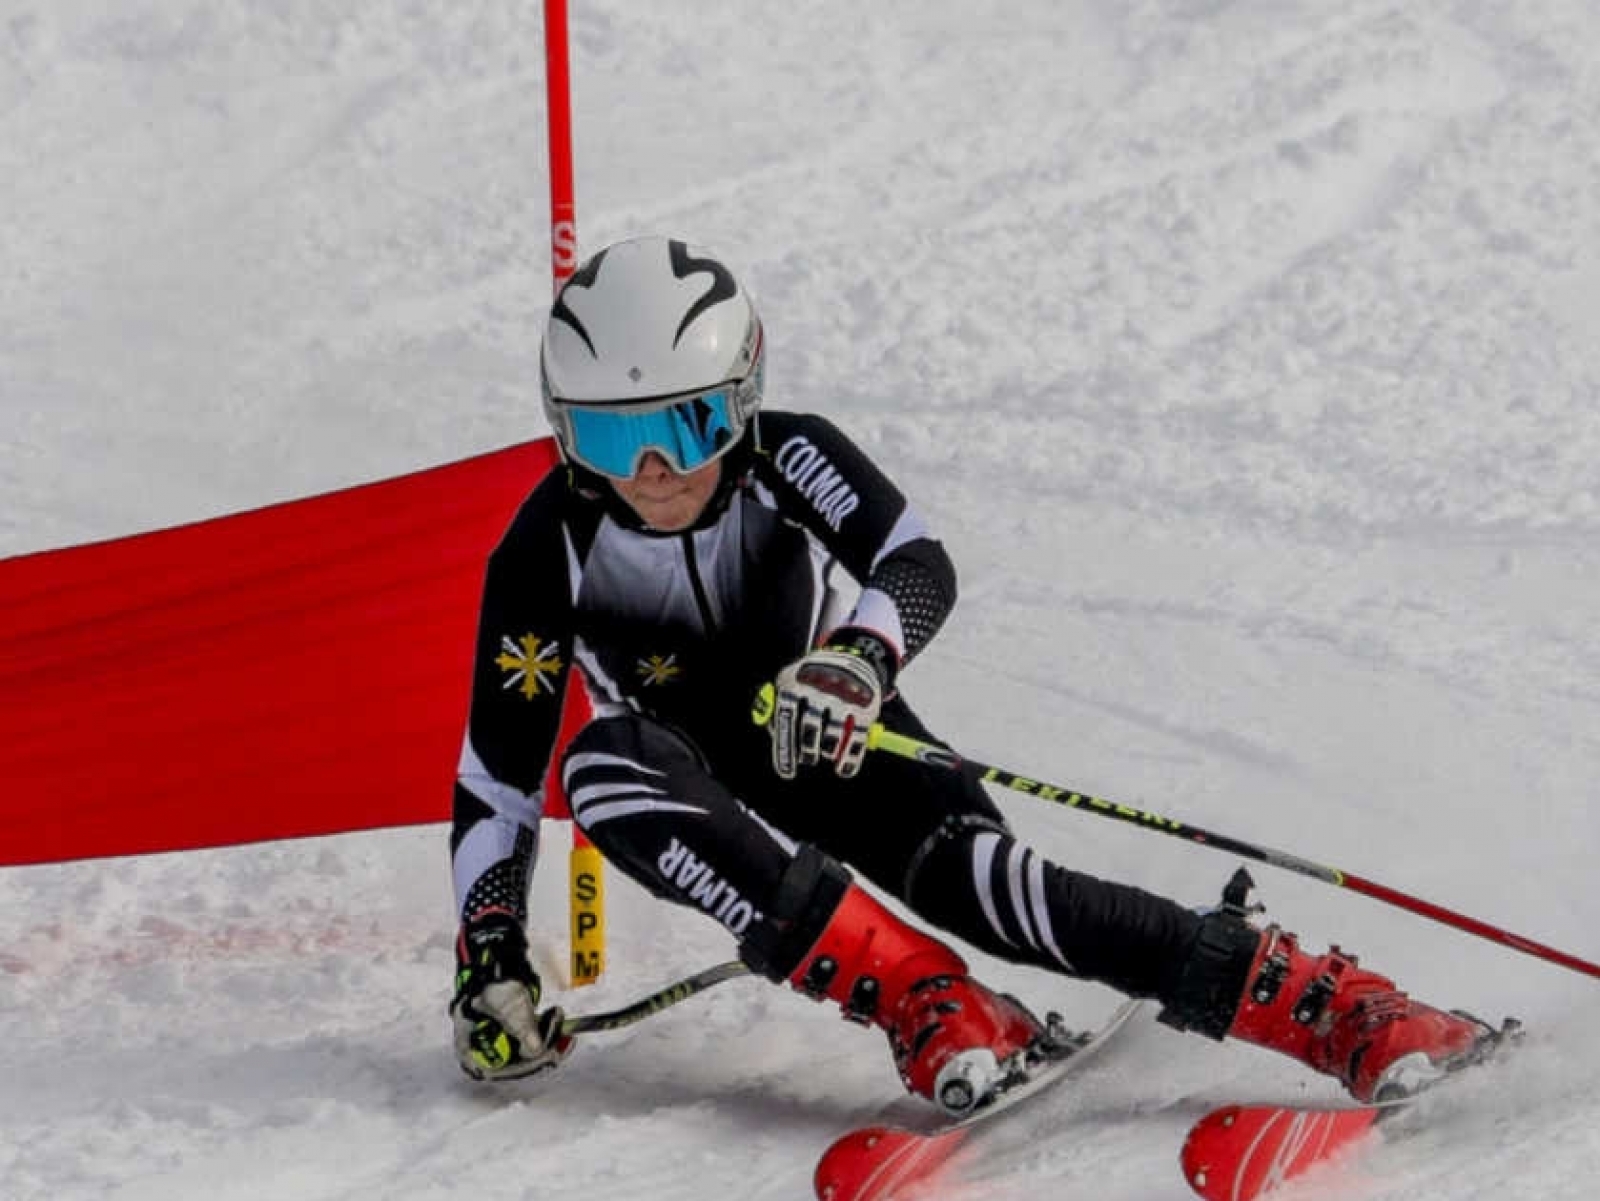 British School Boys ski race event